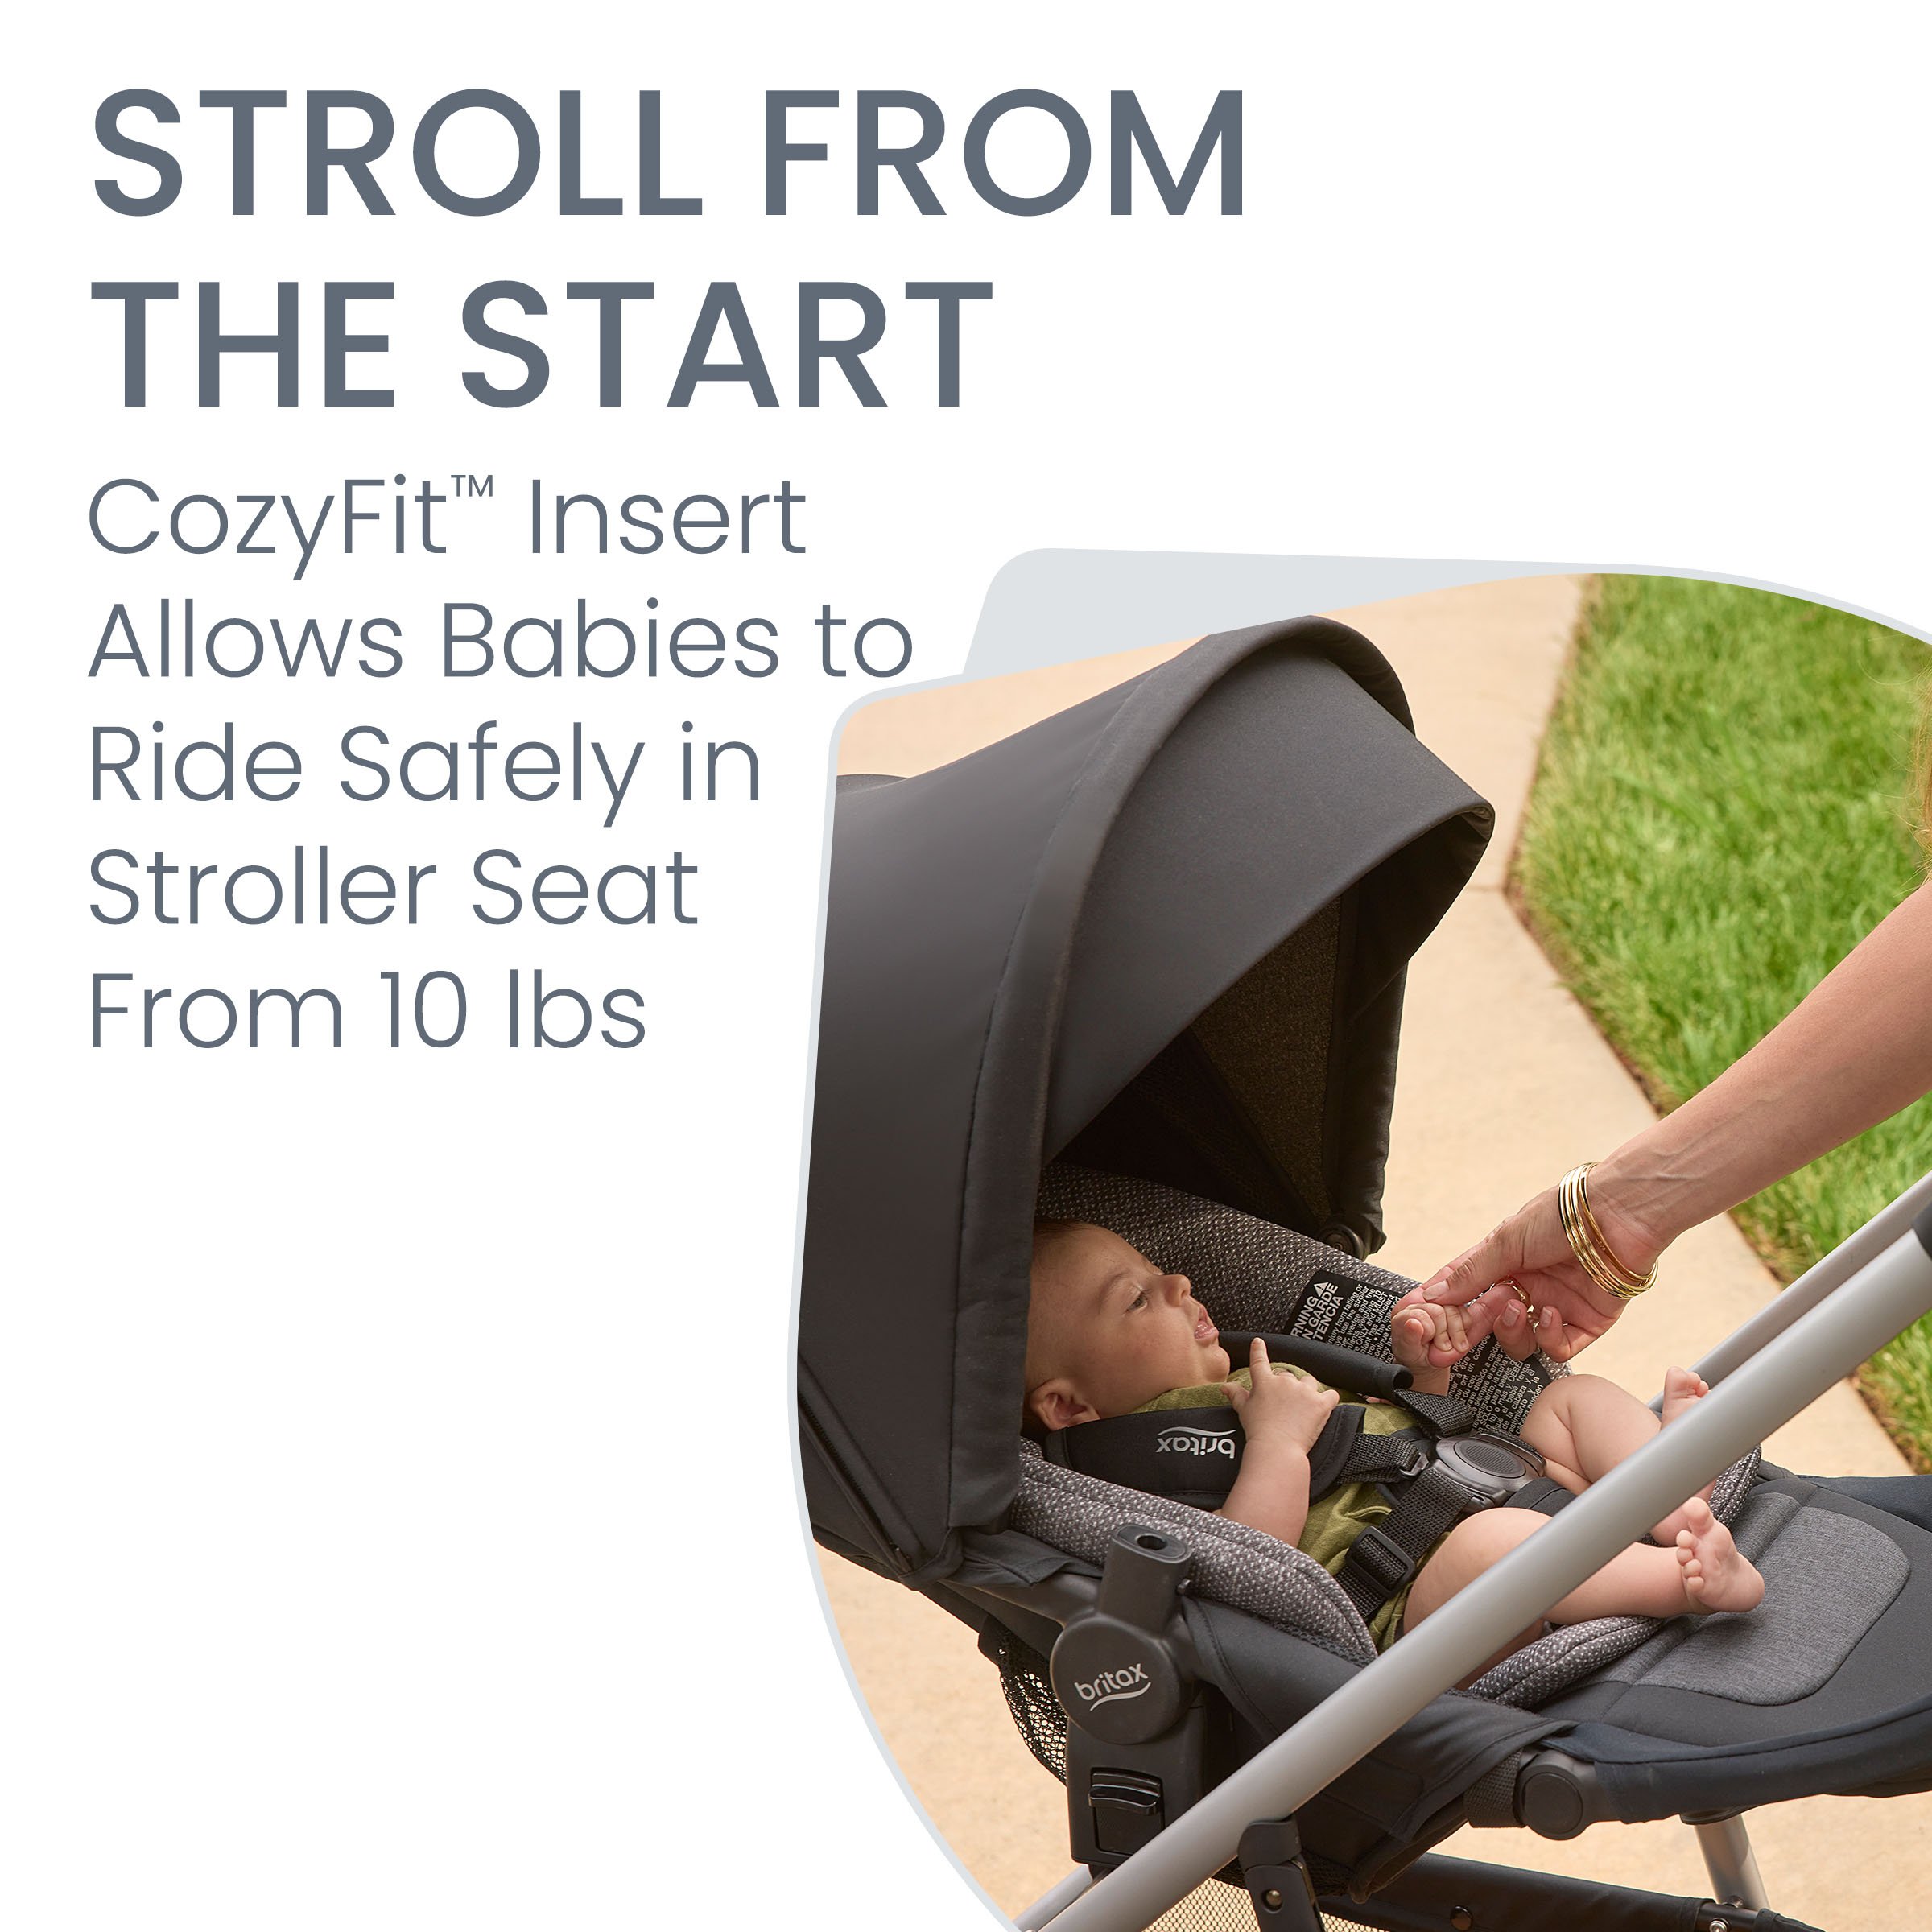 10 lb baby in stroller using cozyFit Insert